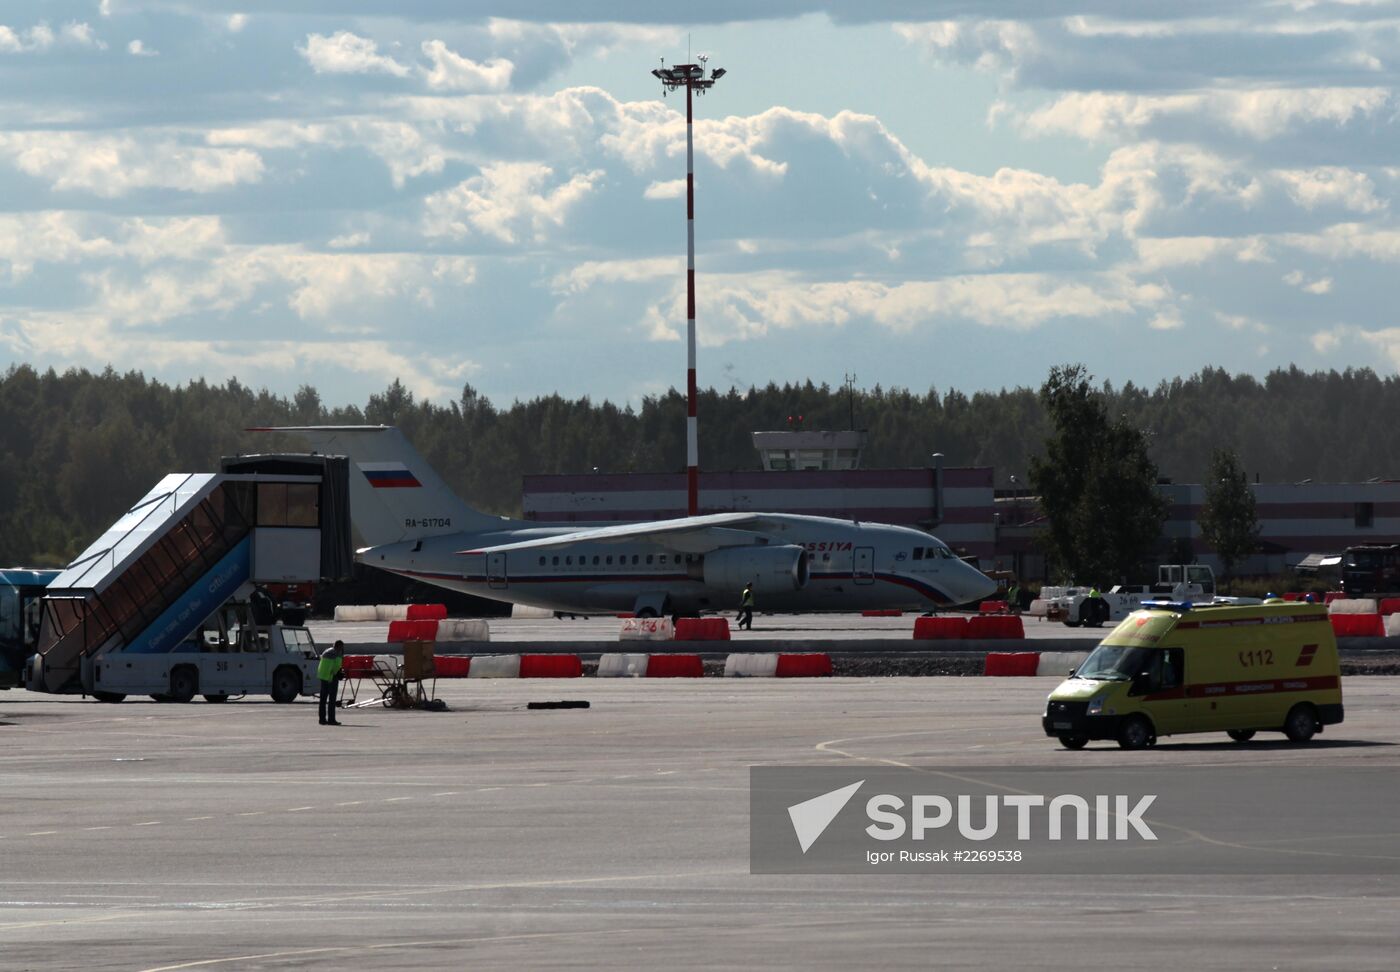 An-148 aircraft lands safely at Pulkovo Airport